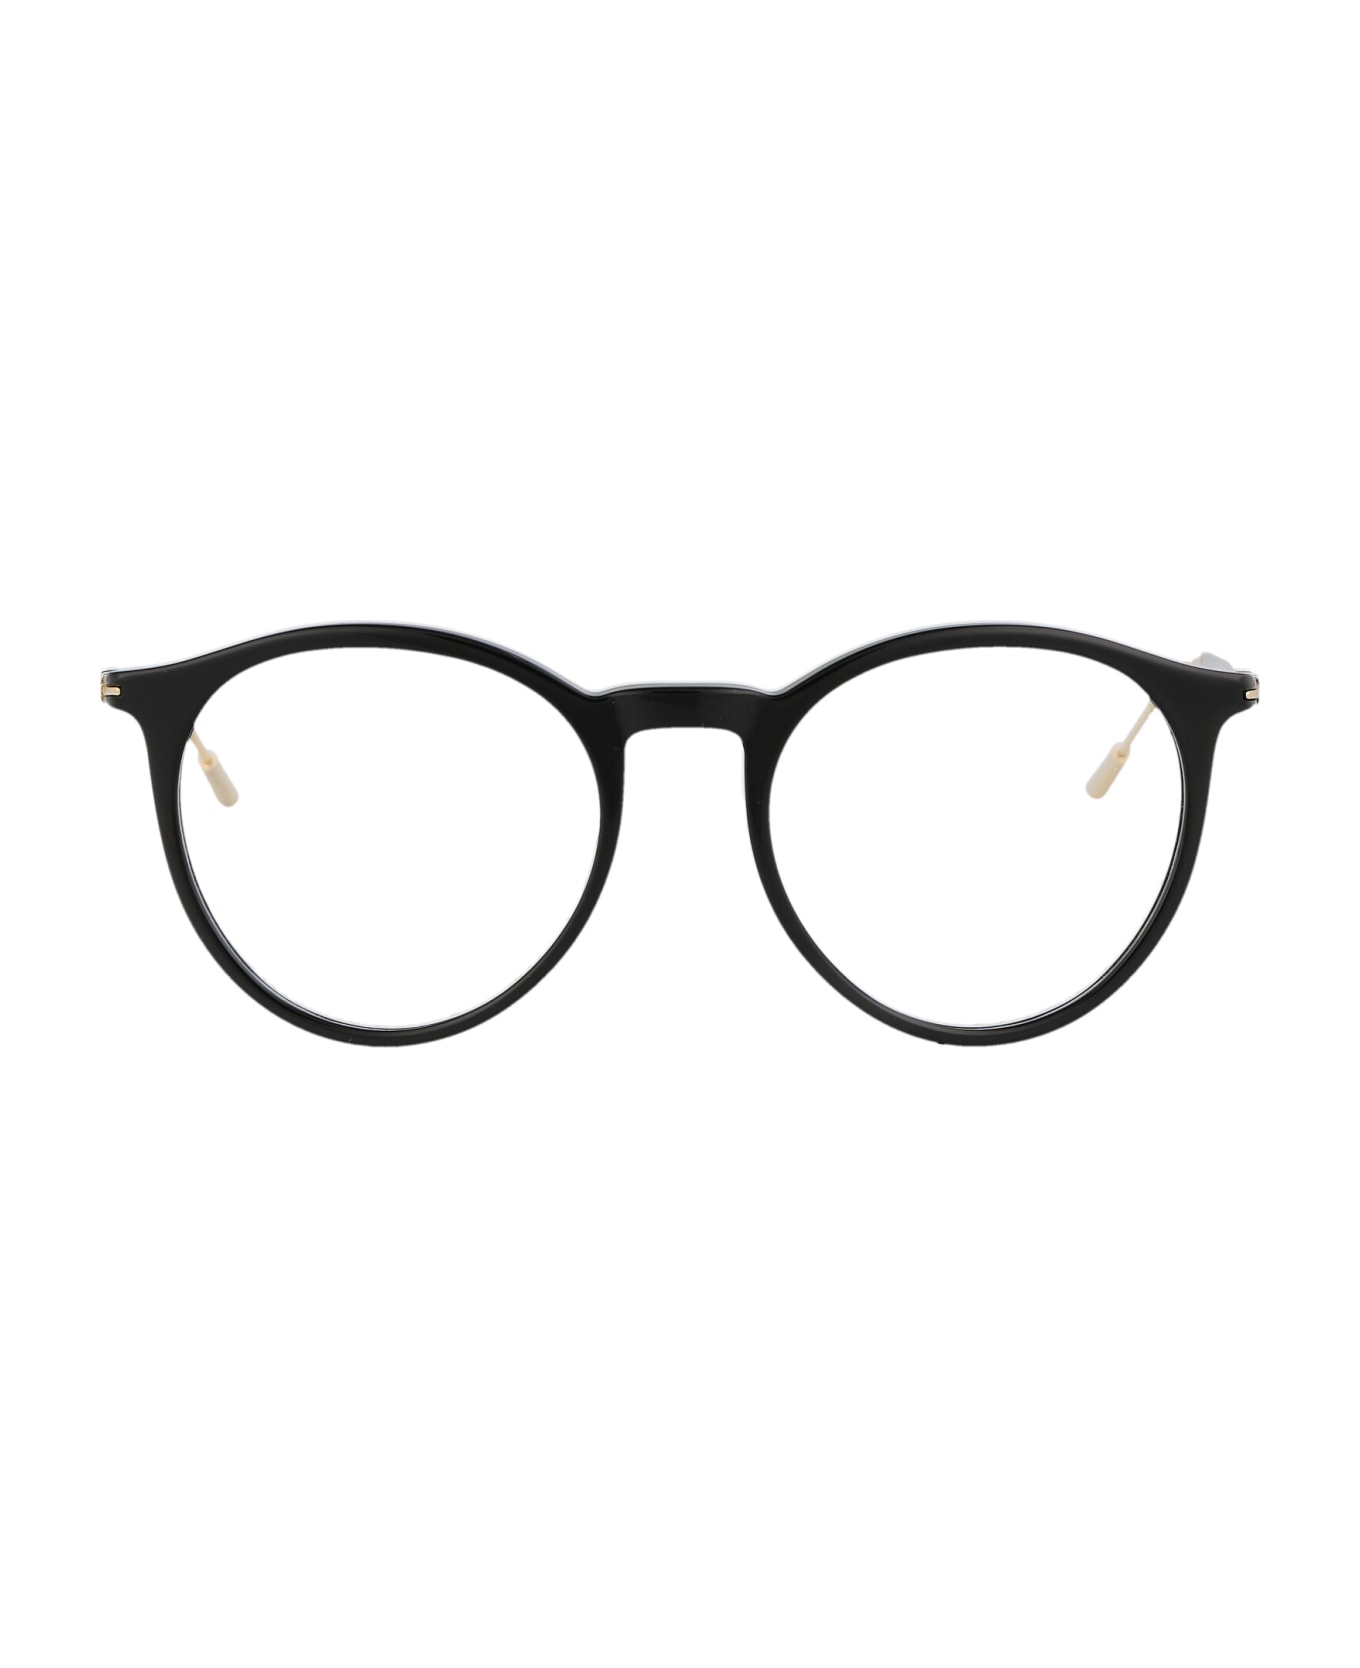 Gucci Eyewear Gg1274o Glasses - 001 BLACK GOLD TRANSPARENT